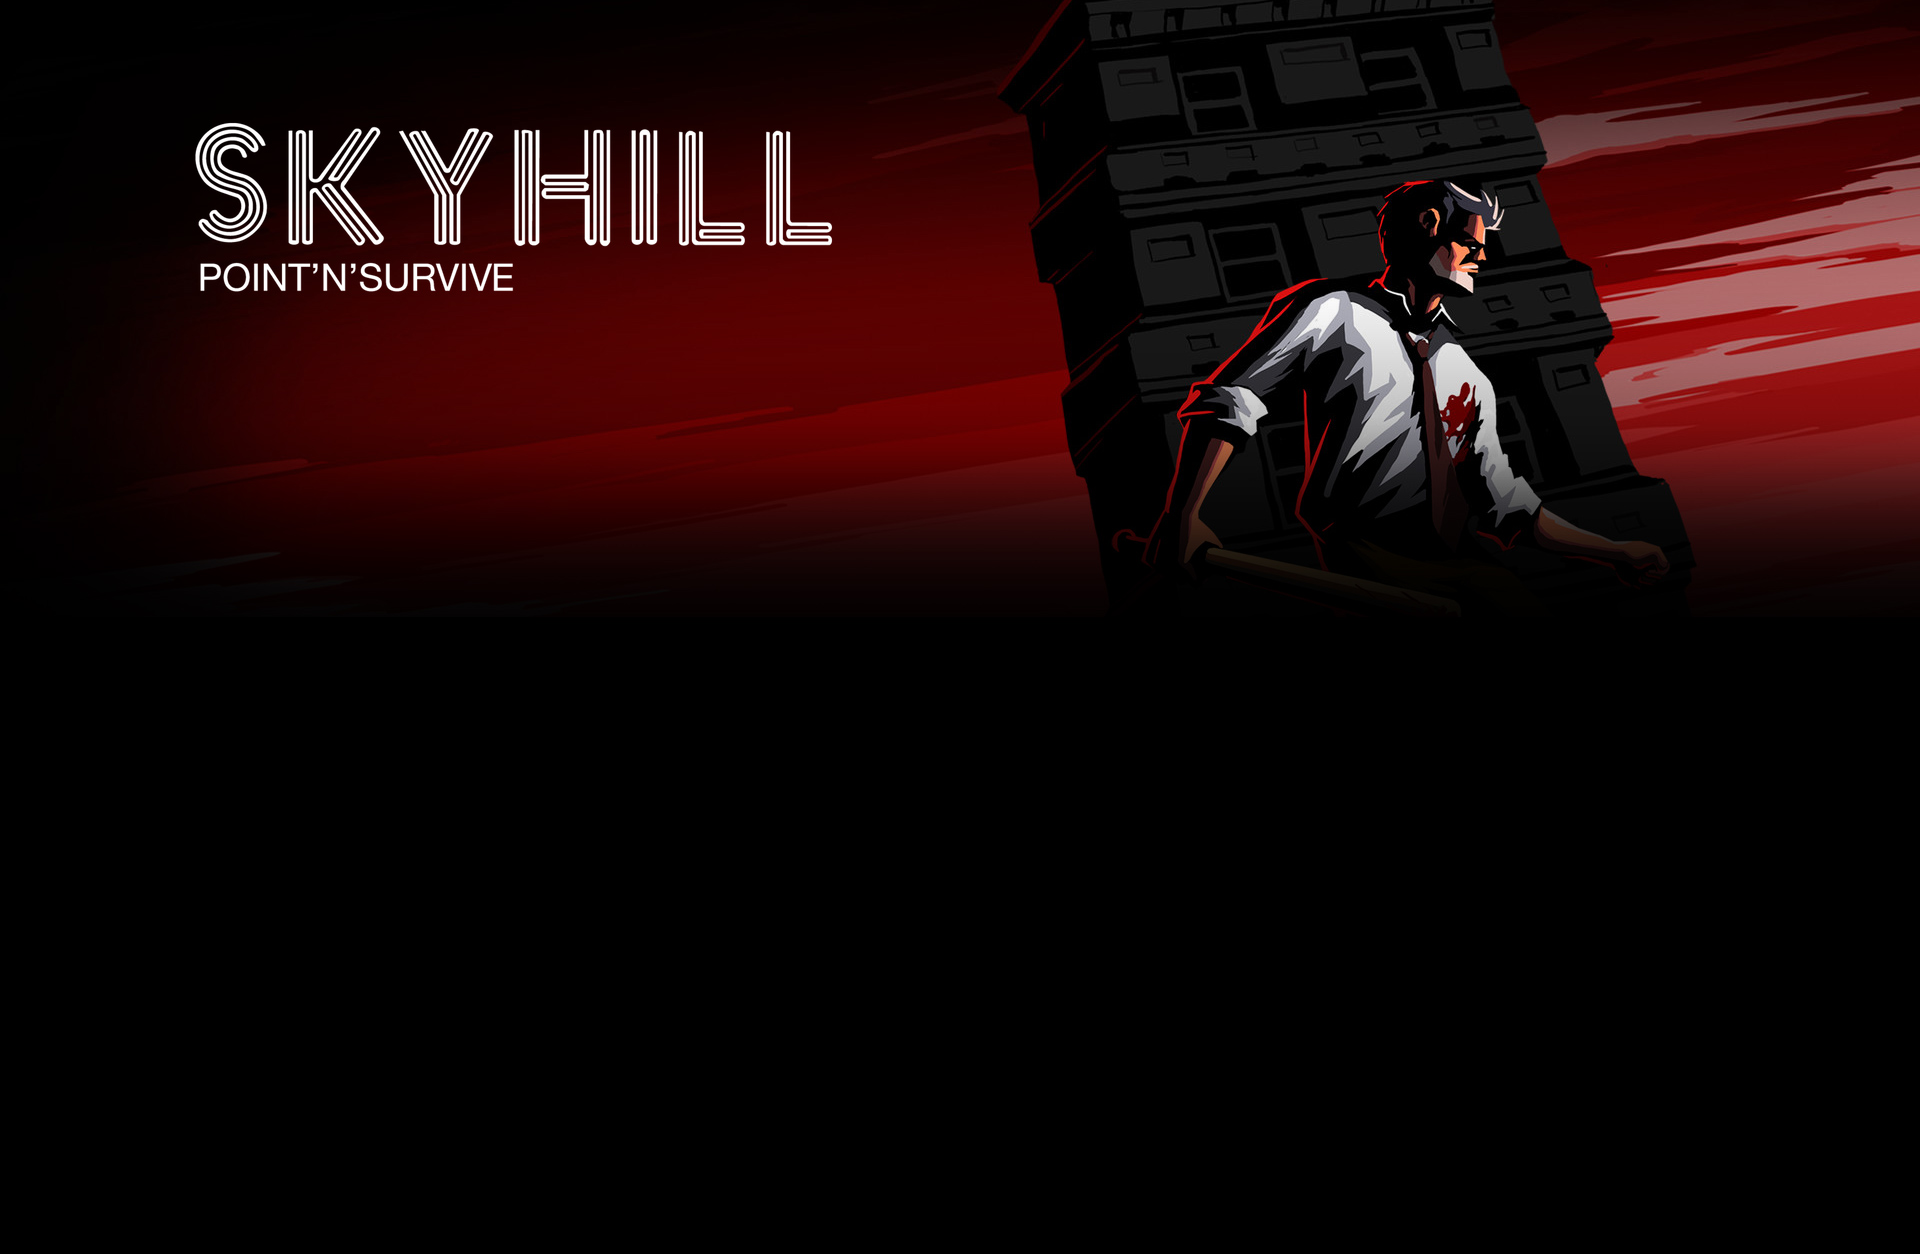 Skyhill